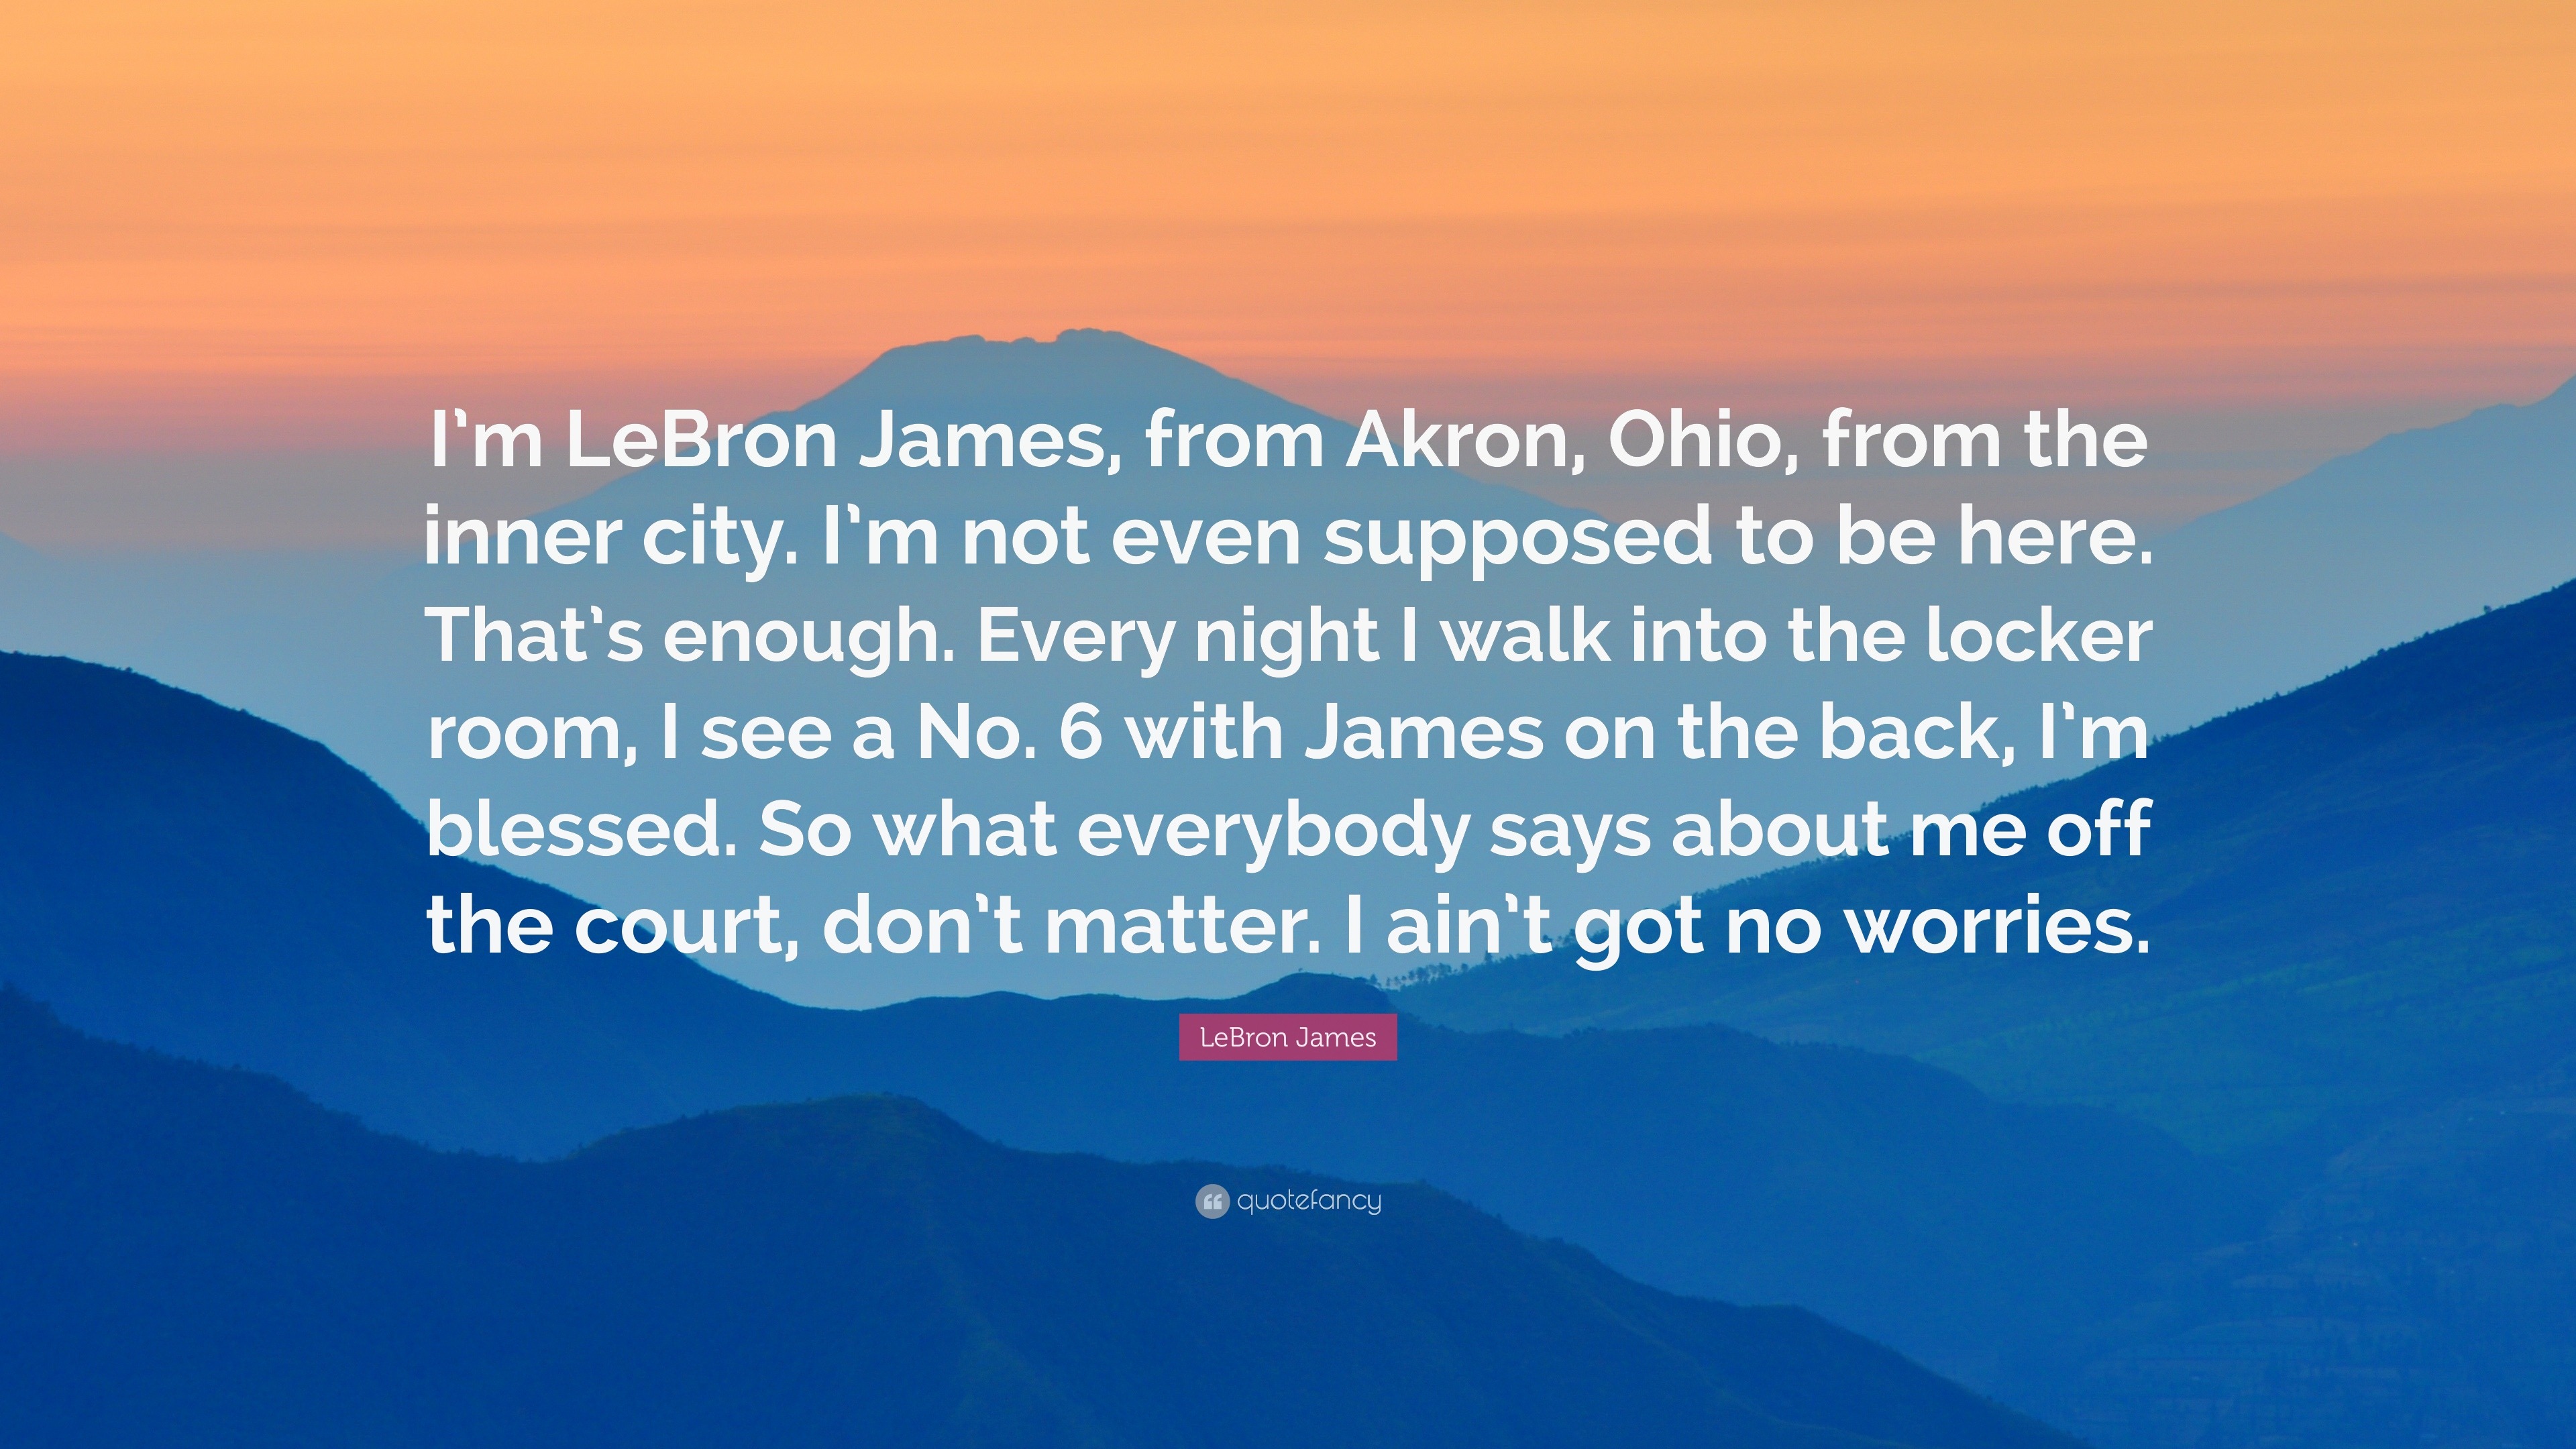 I'm LeBron James from Akron, Ohio 